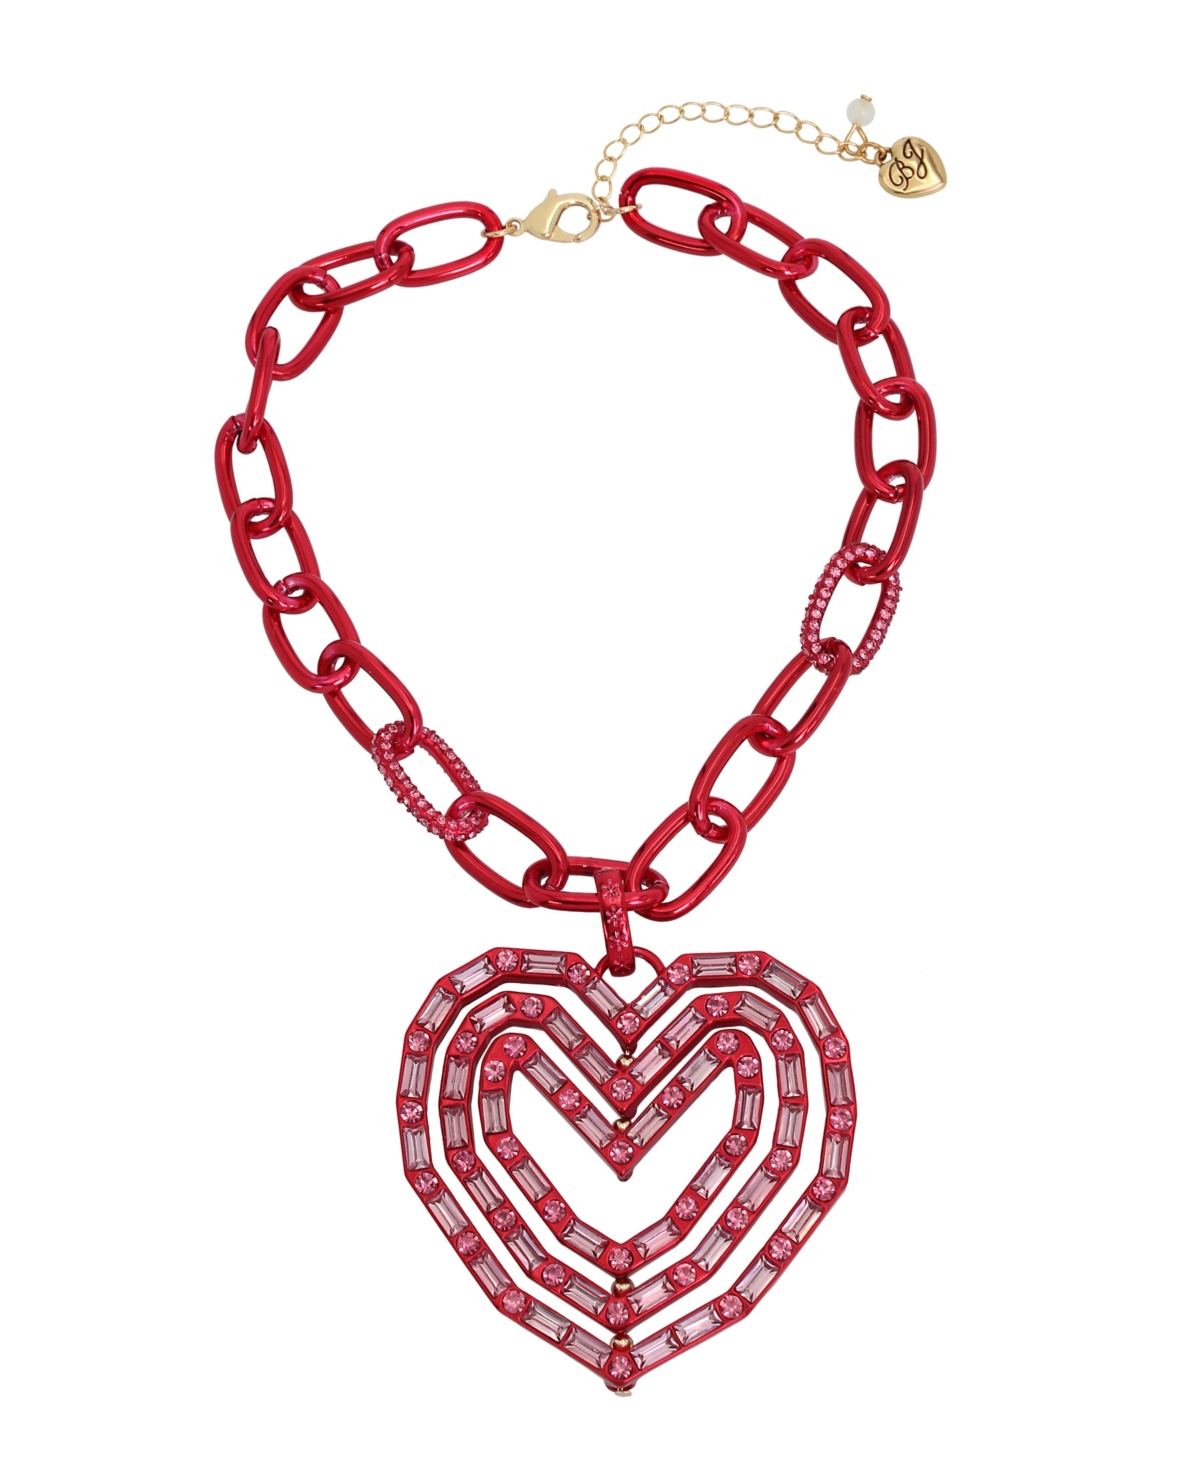 Faux Stone Baguette Heart Pendant Necklace - Red, Gold